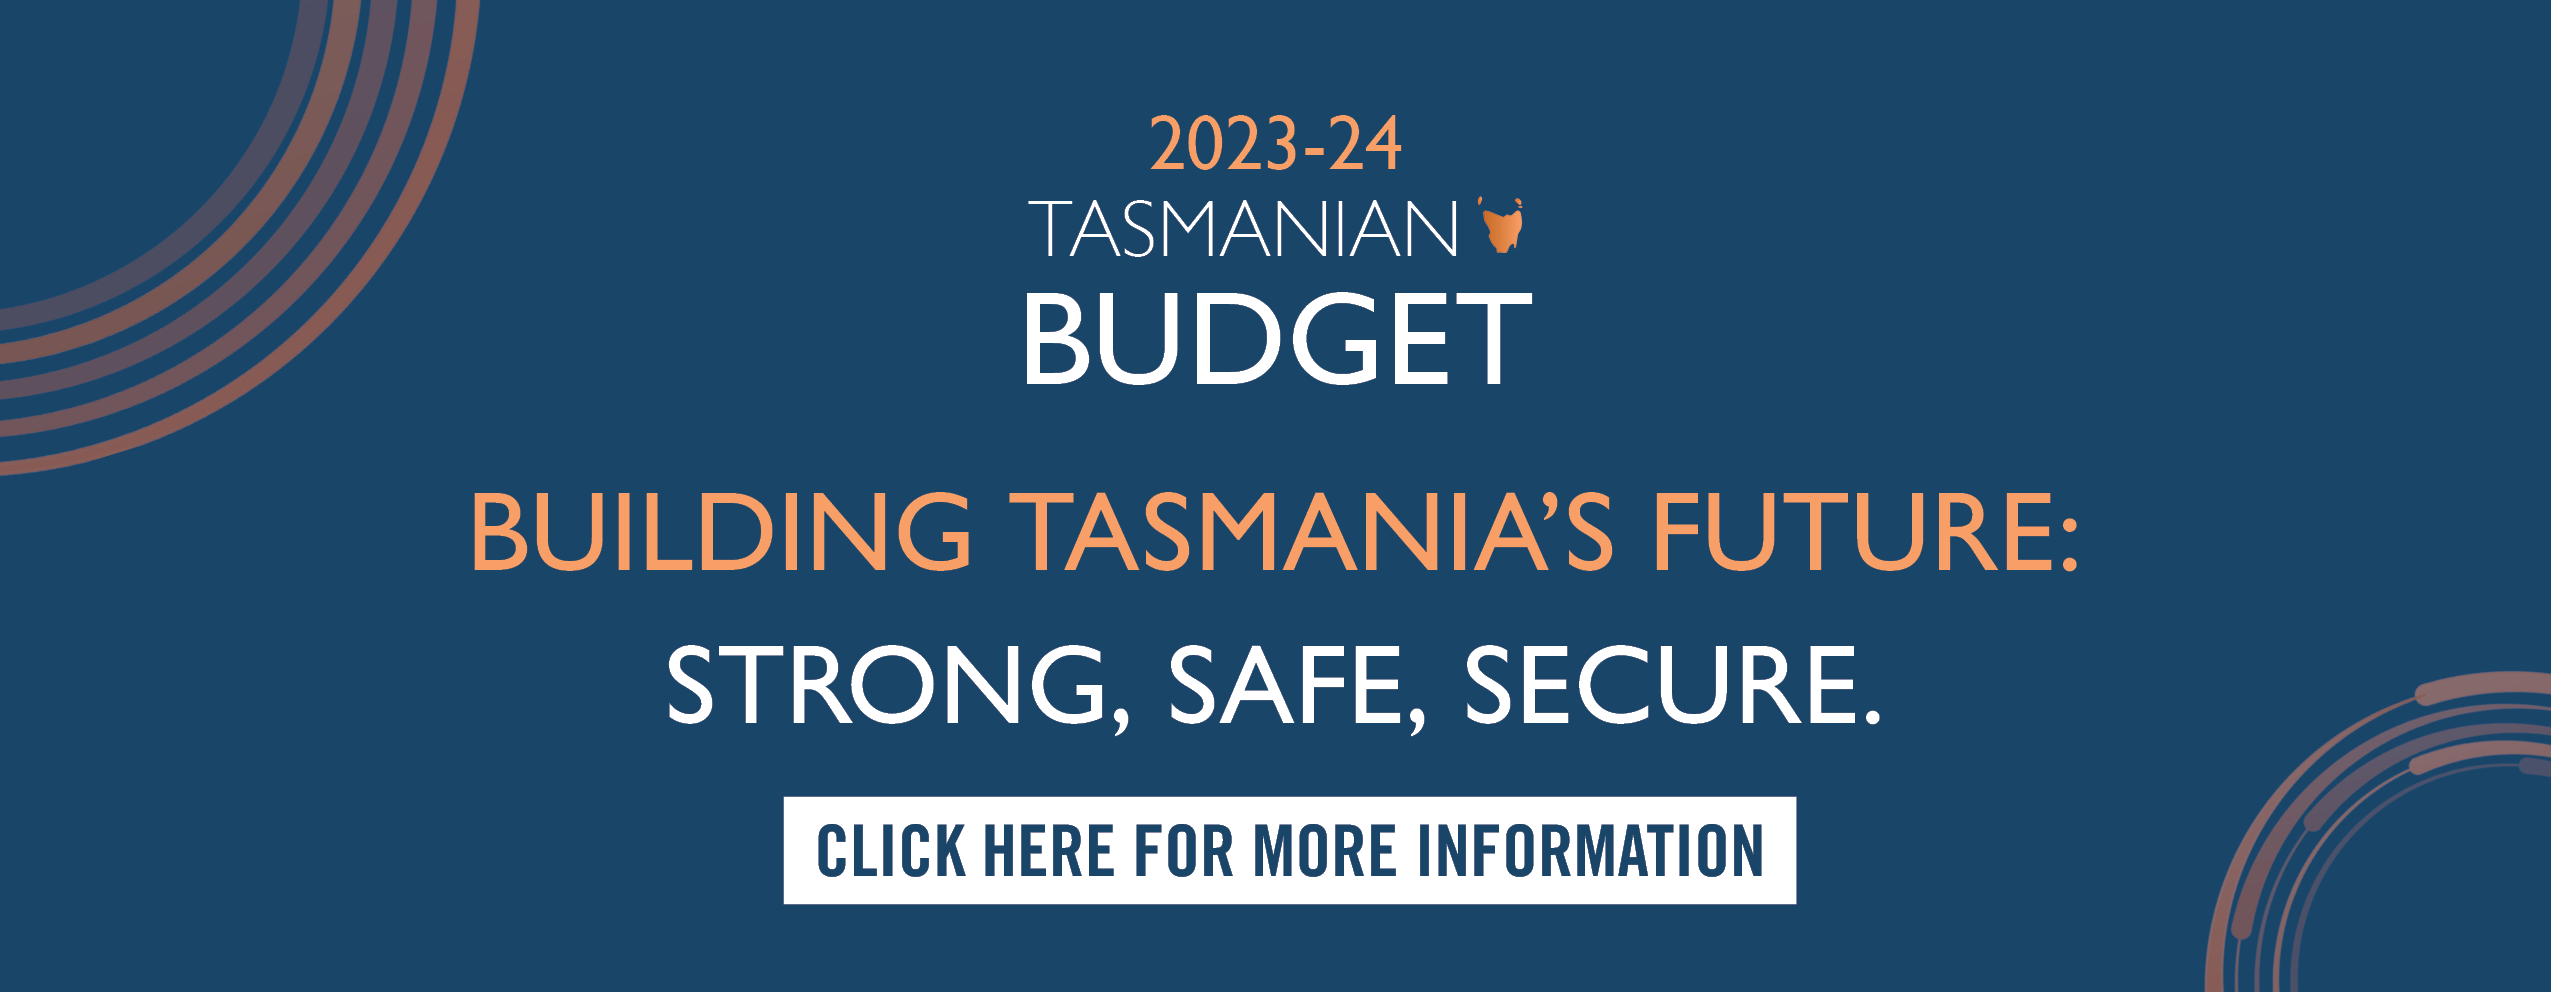 Tasmanian Budget 2023-24